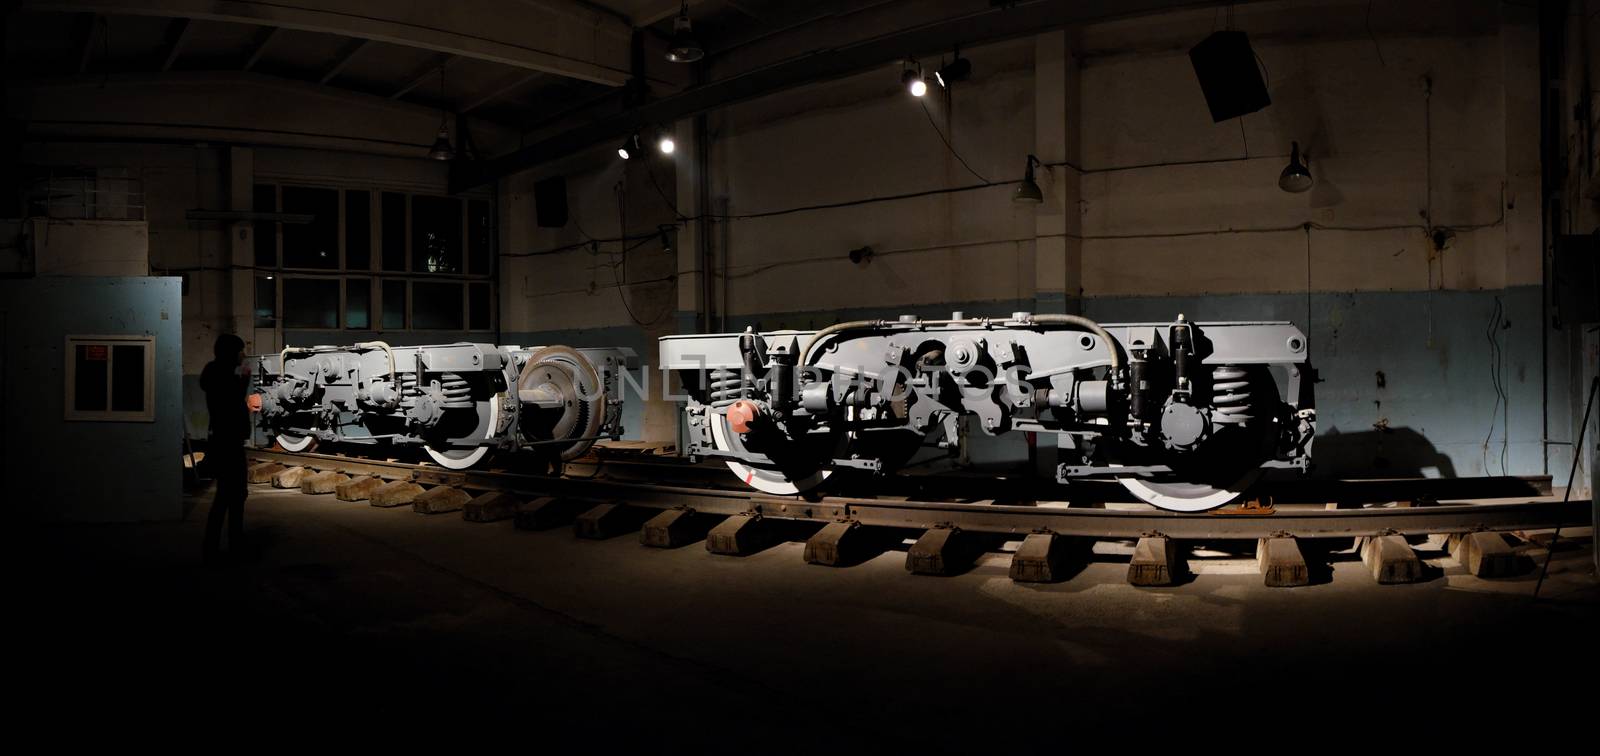 The railway platform, an exhibit of the fourth industrial bienni by Antonshemiatikhin